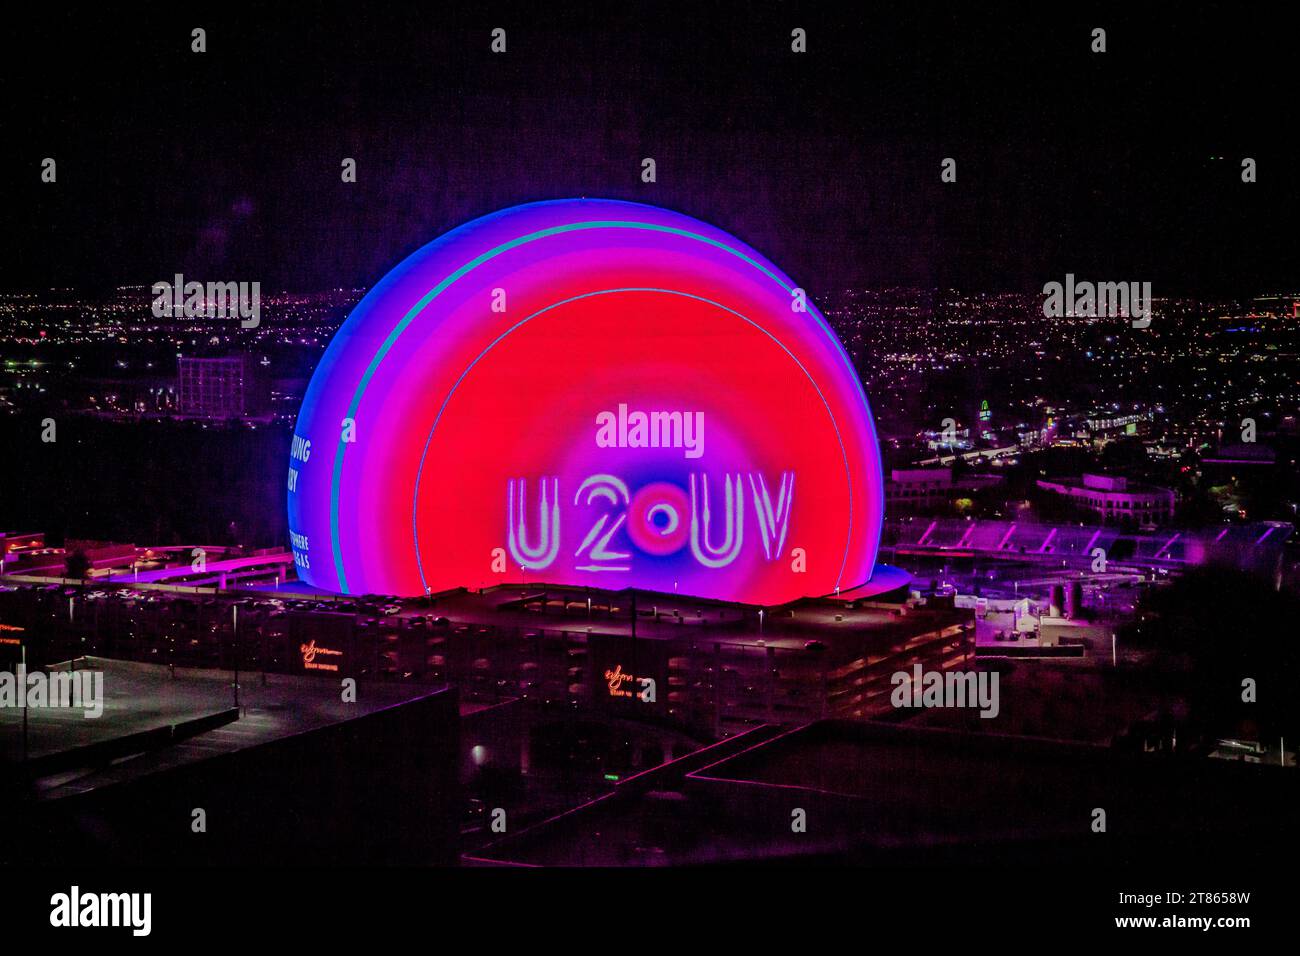 Las Vegas, Nevada, USA - November 7, 2023: The MSG Sphere showing U2:UV advert for U2 concert Stock Photo